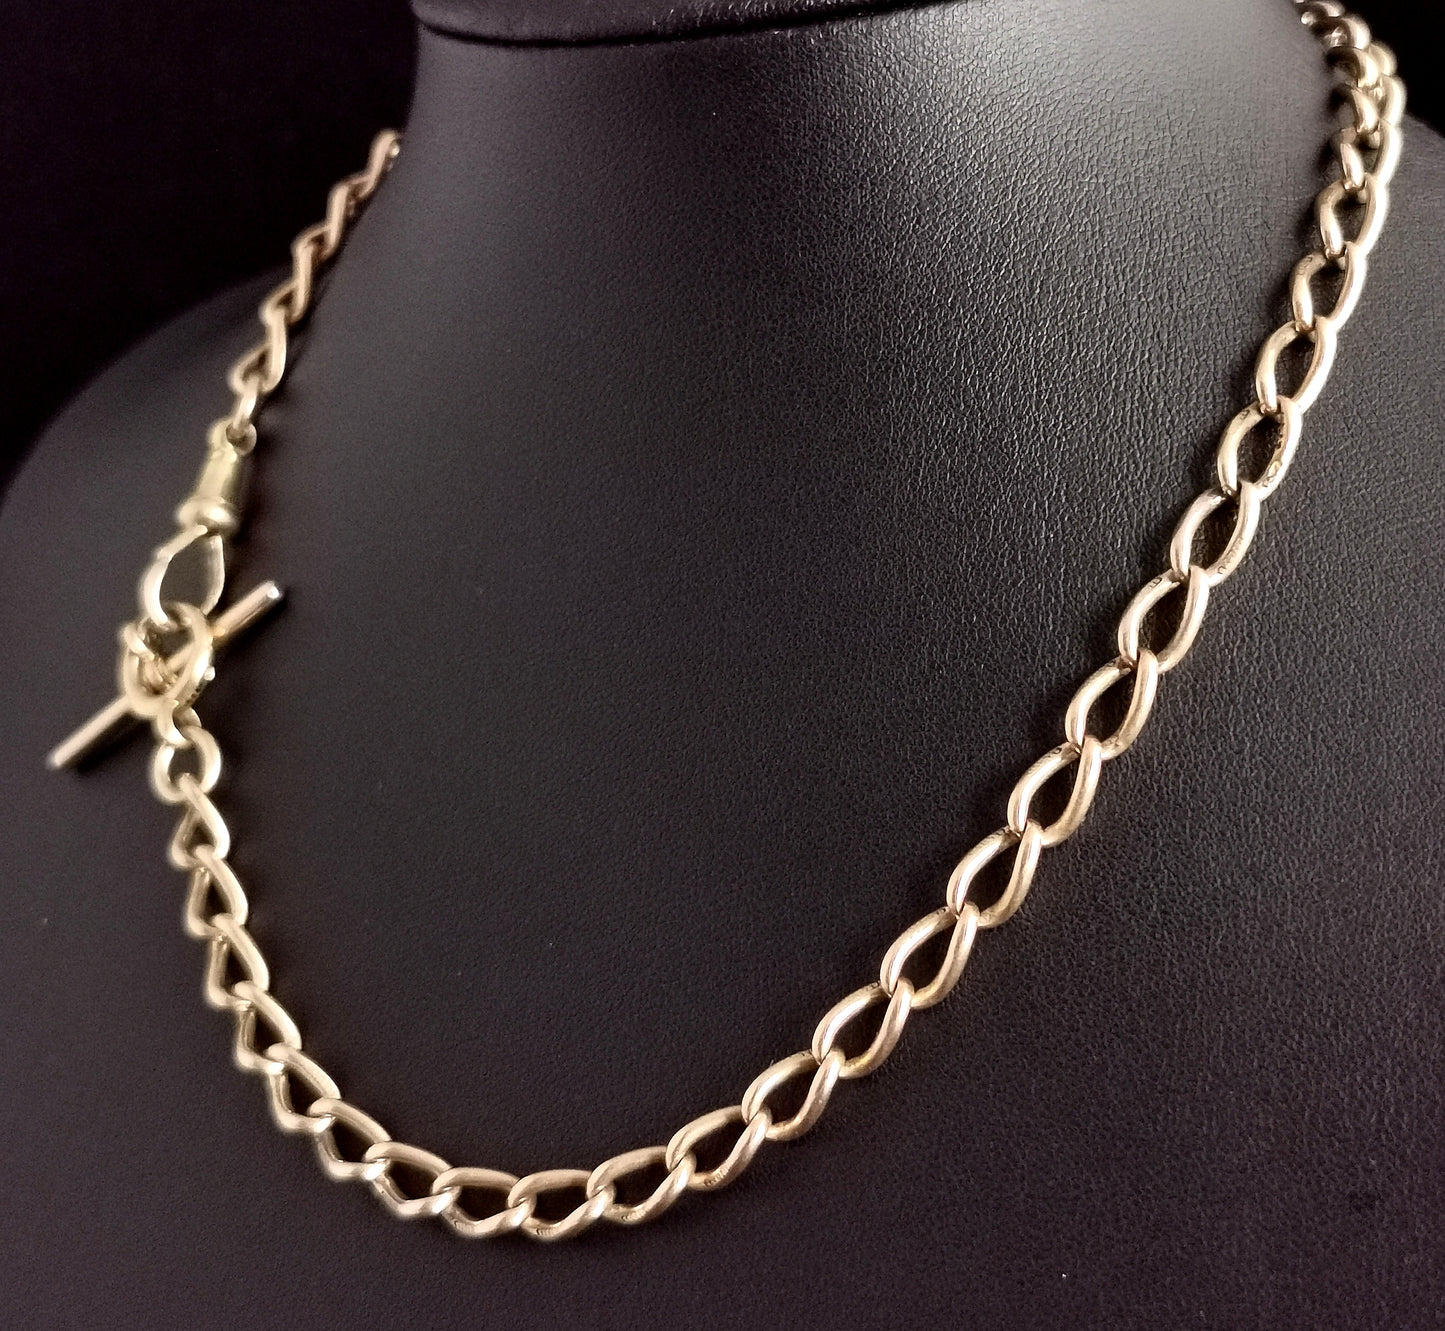 Antique 15ct gold Albert chain, watch chain necklace, Victorian